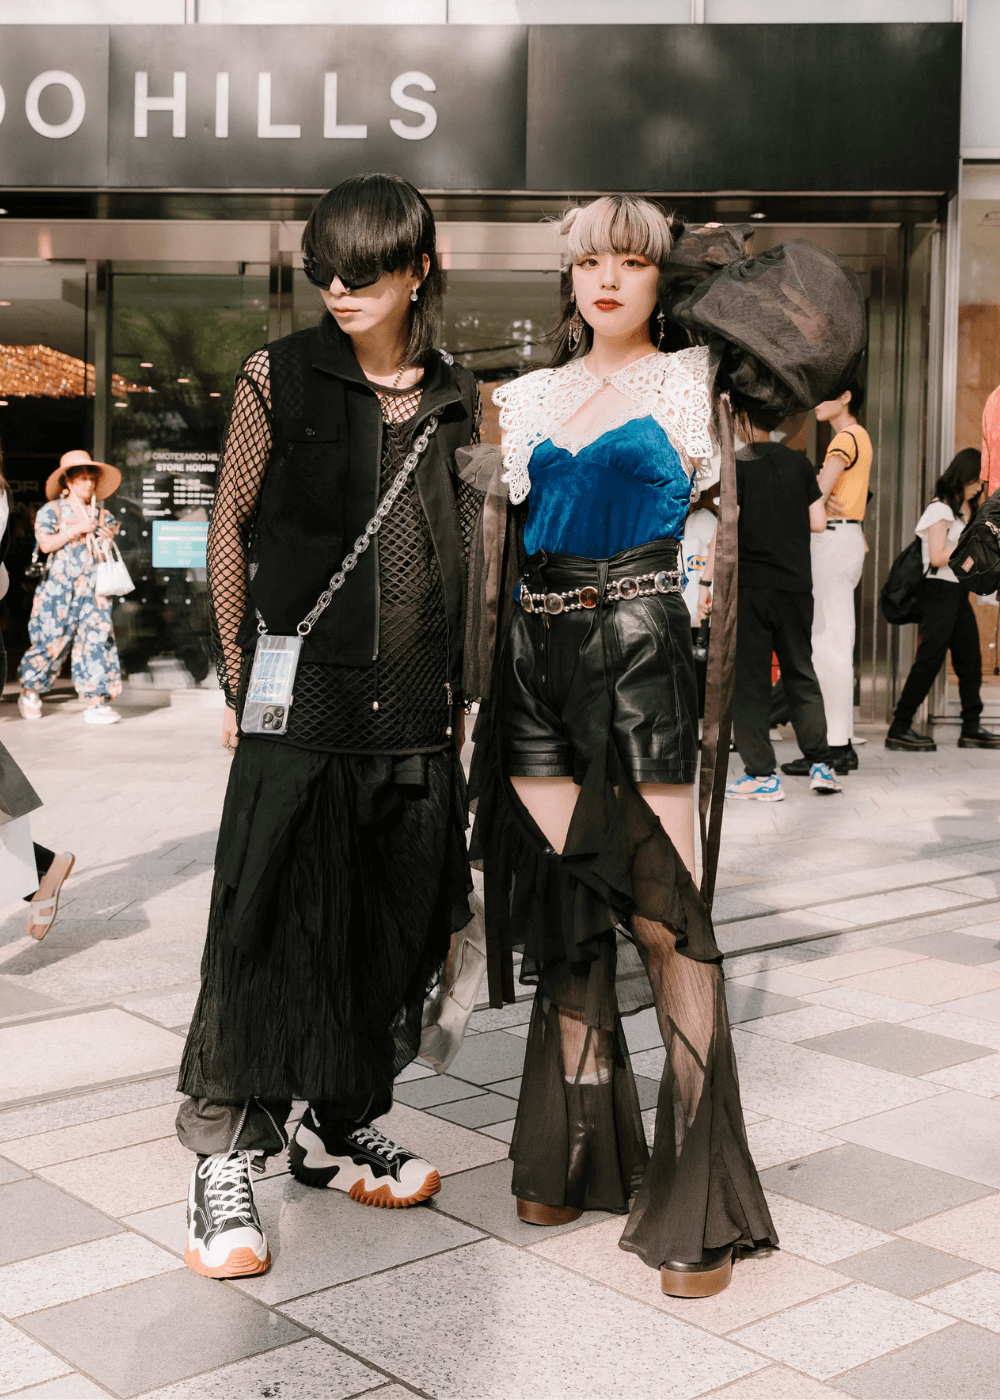 Street Style asiático - roupas diversas - Street Style asiático - outono - duas pessoas asiáticas paradas em pé - https://stealthelook.com.br